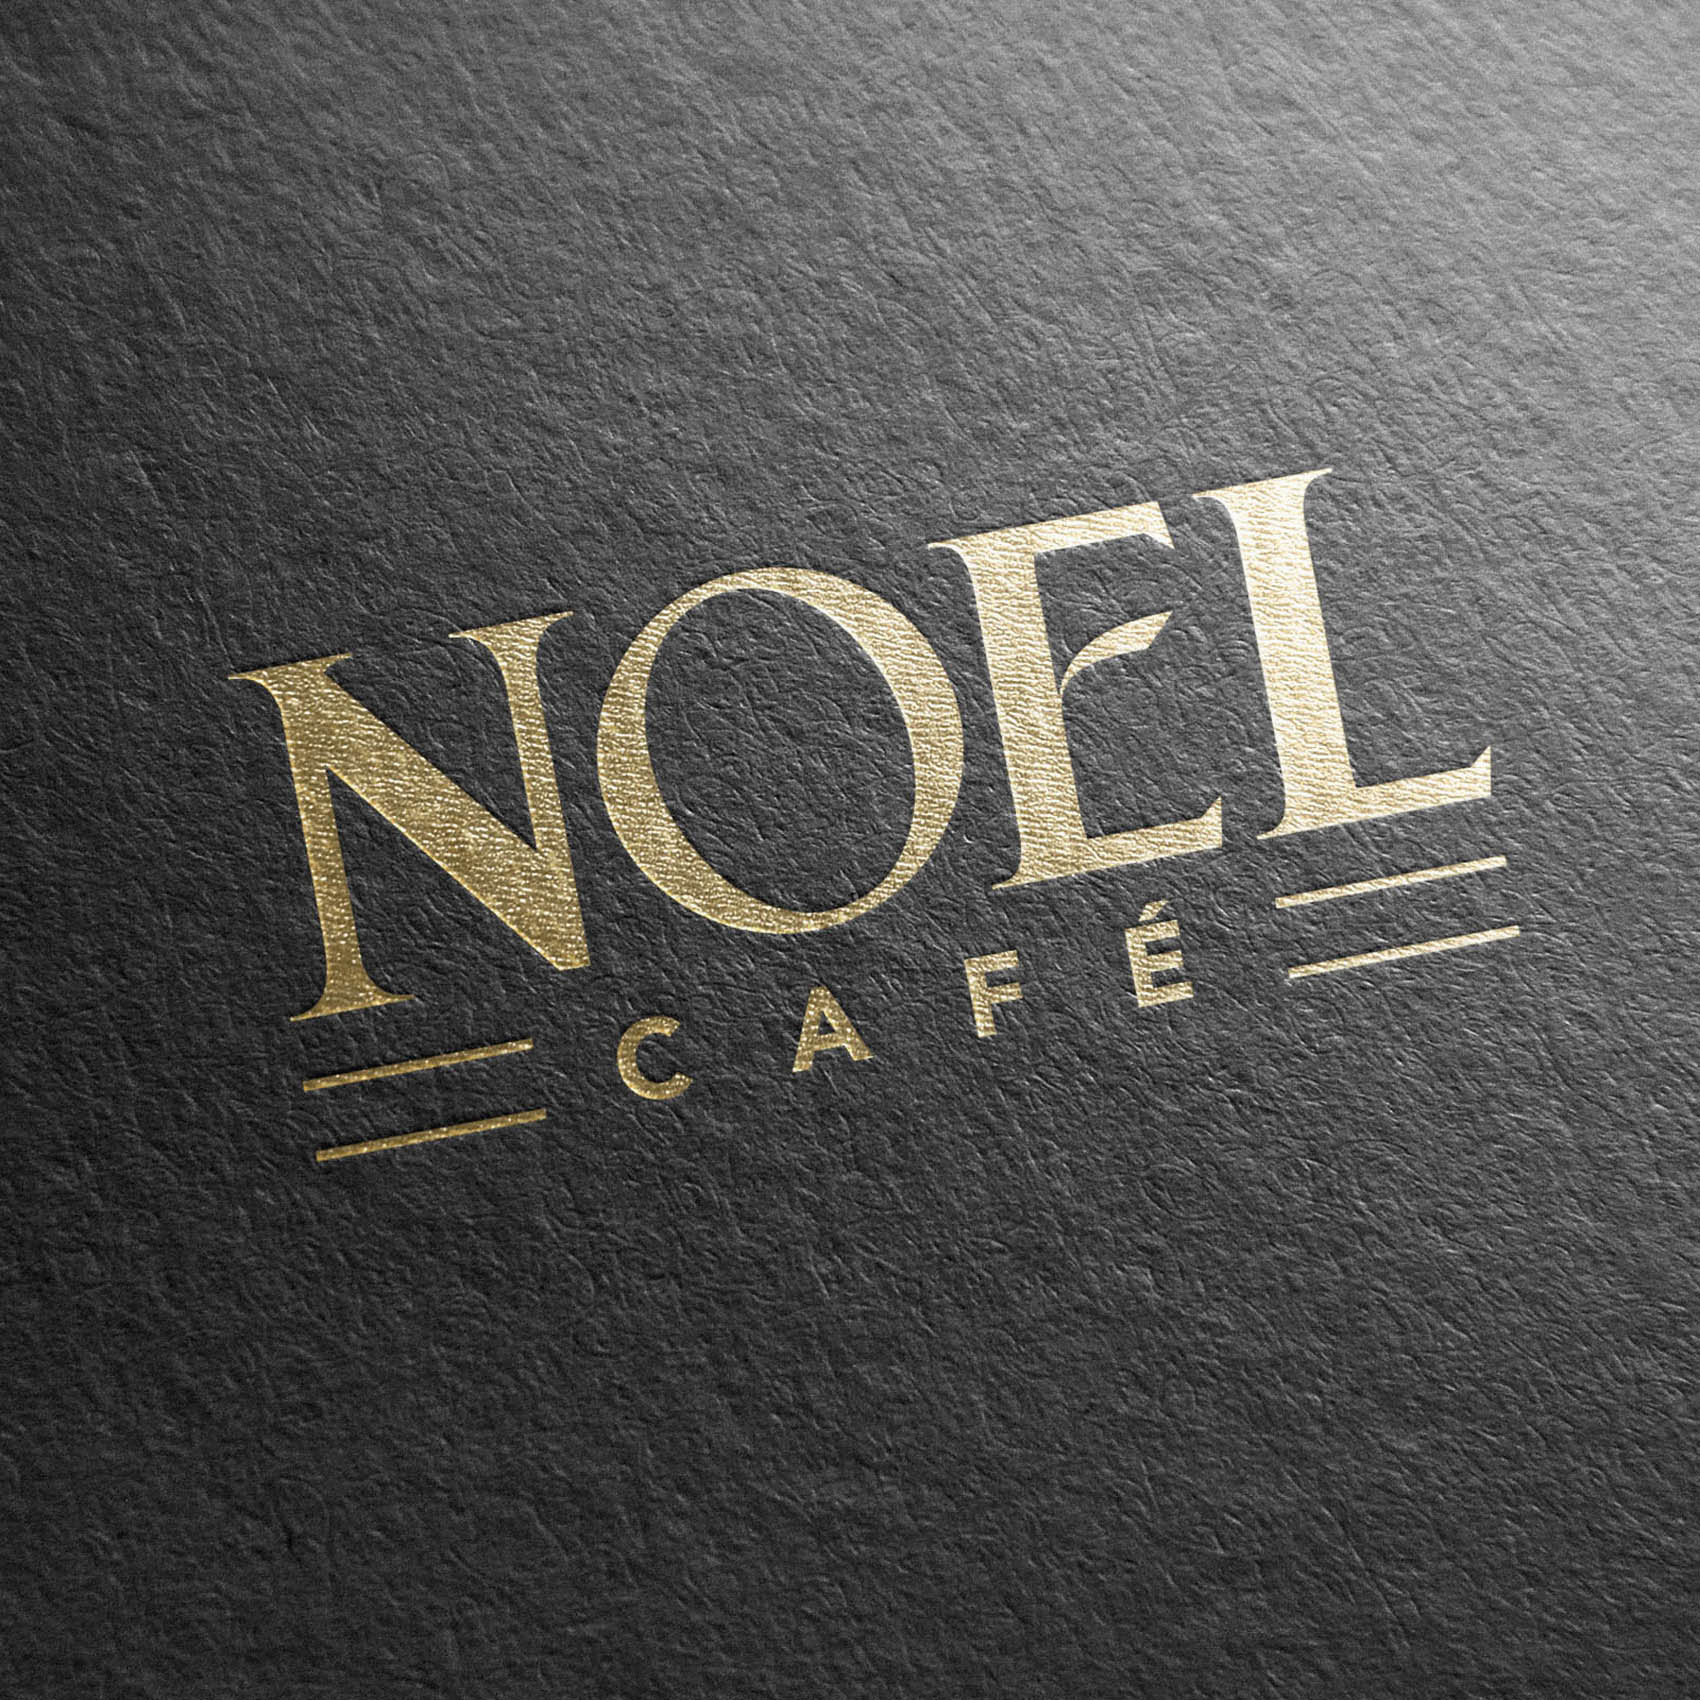 noel cafe - coffee shop logo high end luxury branding barista8